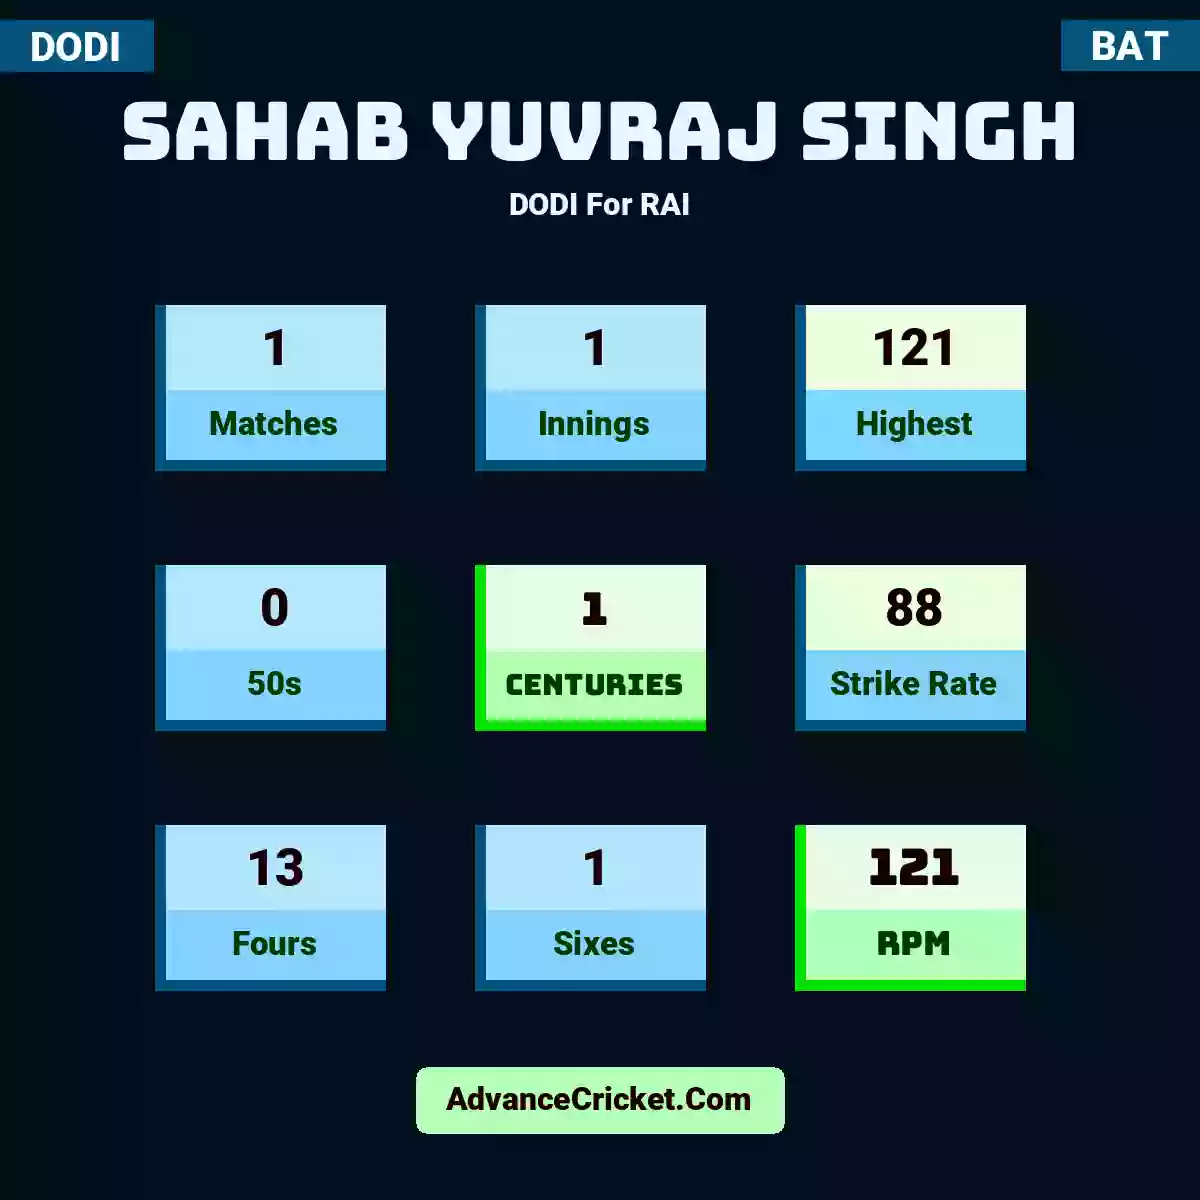 Sahab Yuvraj Singh DODI  For RAI, Sahab Yuvraj Singh played 1 matches, scored 121 runs as highest, 0 half-centuries, and 1 centuries, with a strike rate of 88. S.Yuvraj.Singh hit 13 fours and 1 sixes, with an RPM of 121.